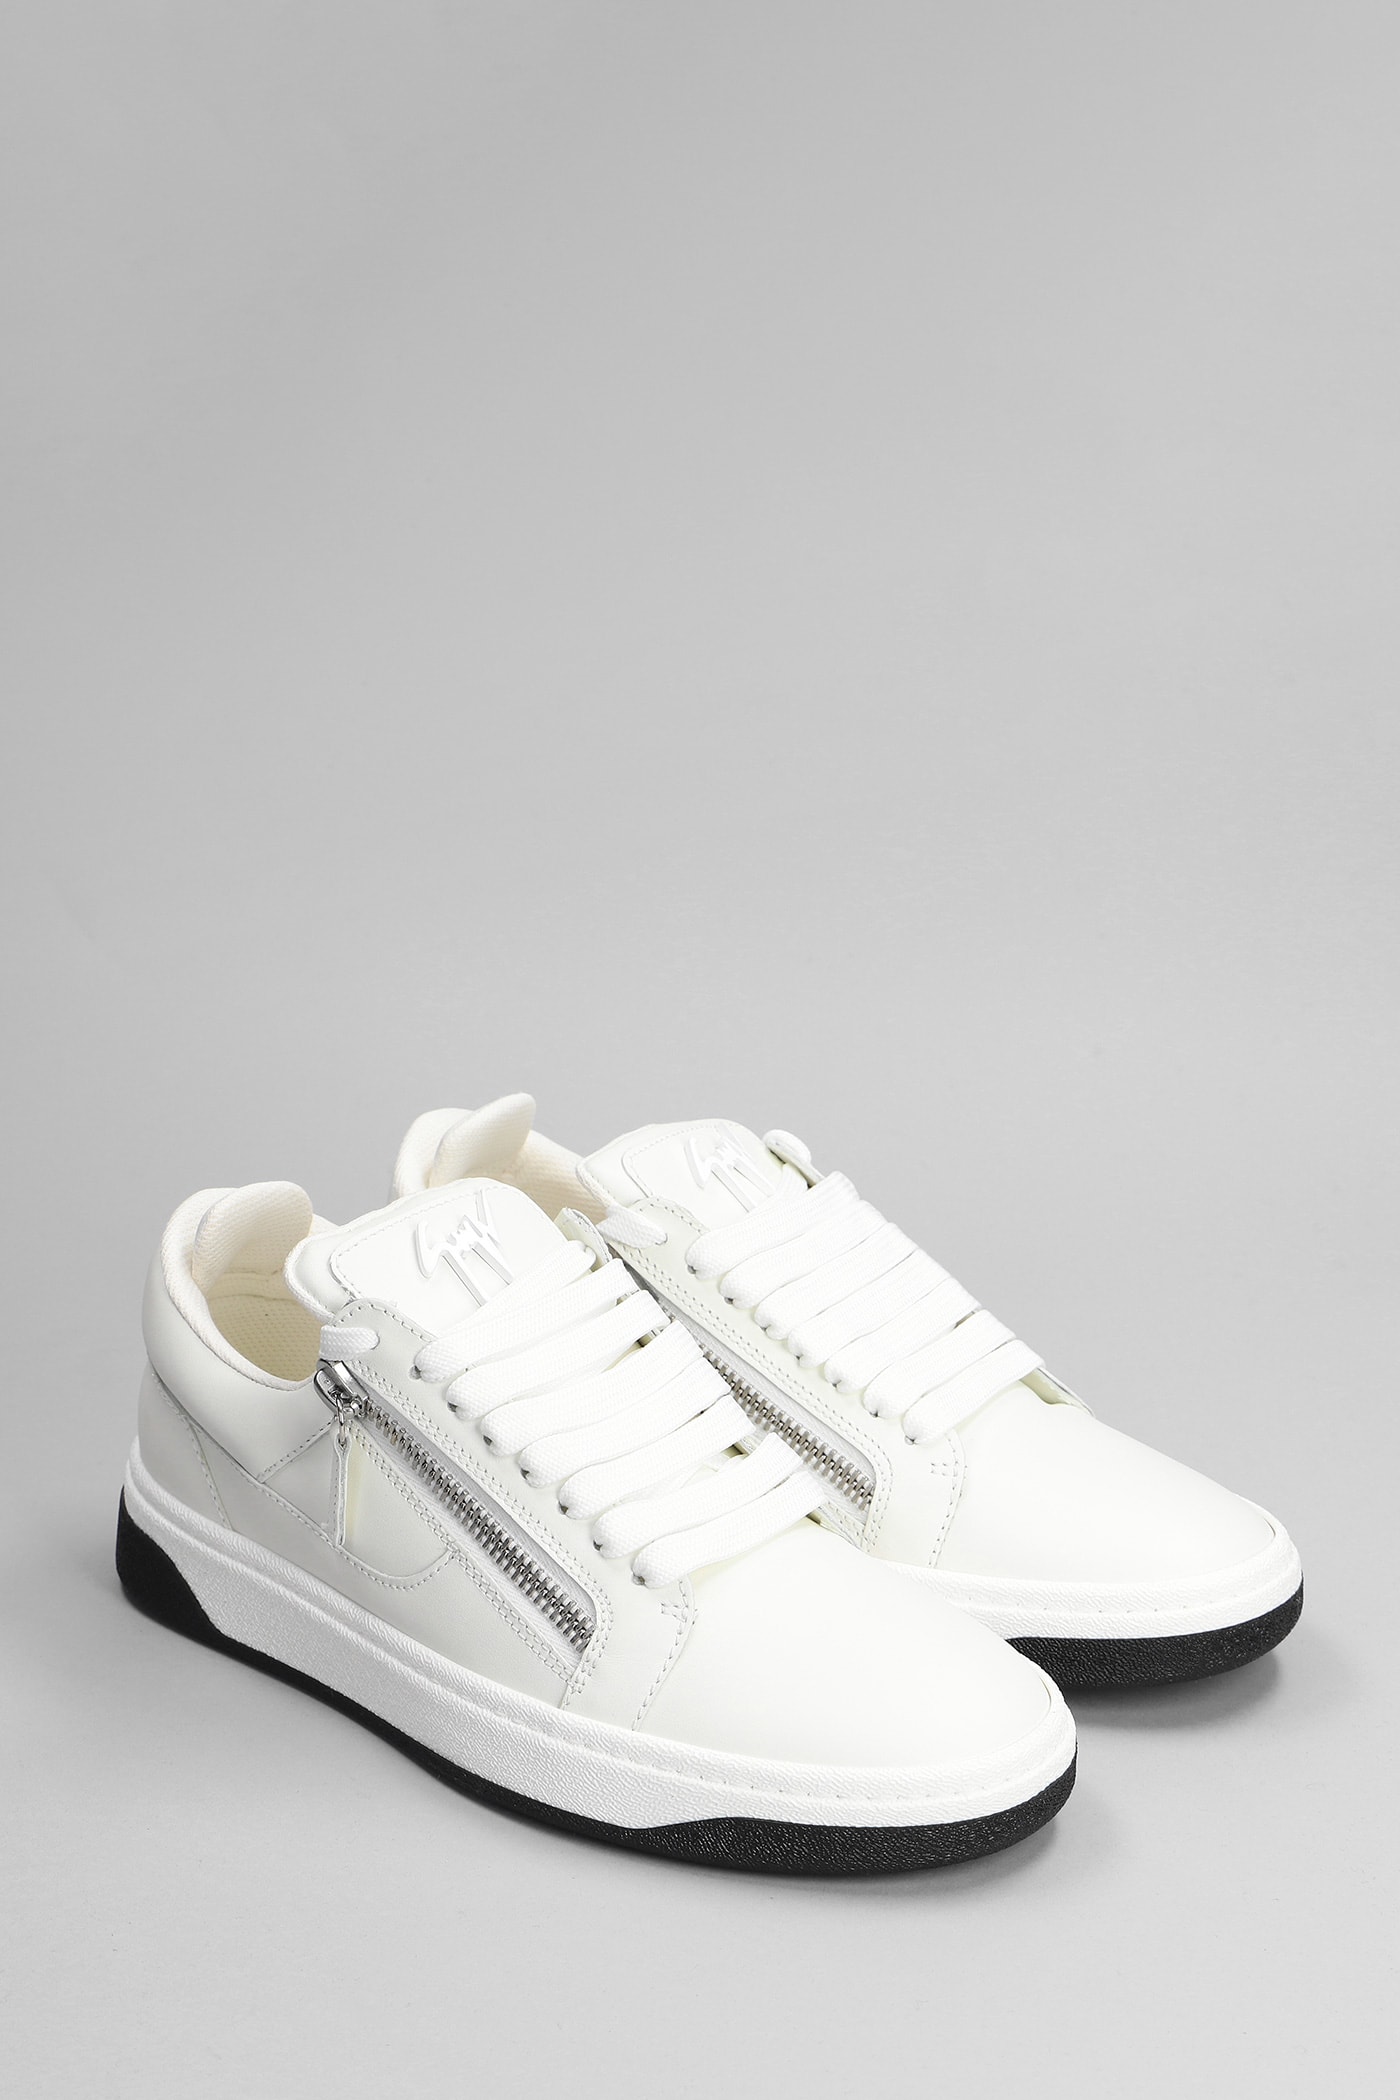 Giuseppe Zanotti Gz94 Sneakers In White Leather | ModeSens